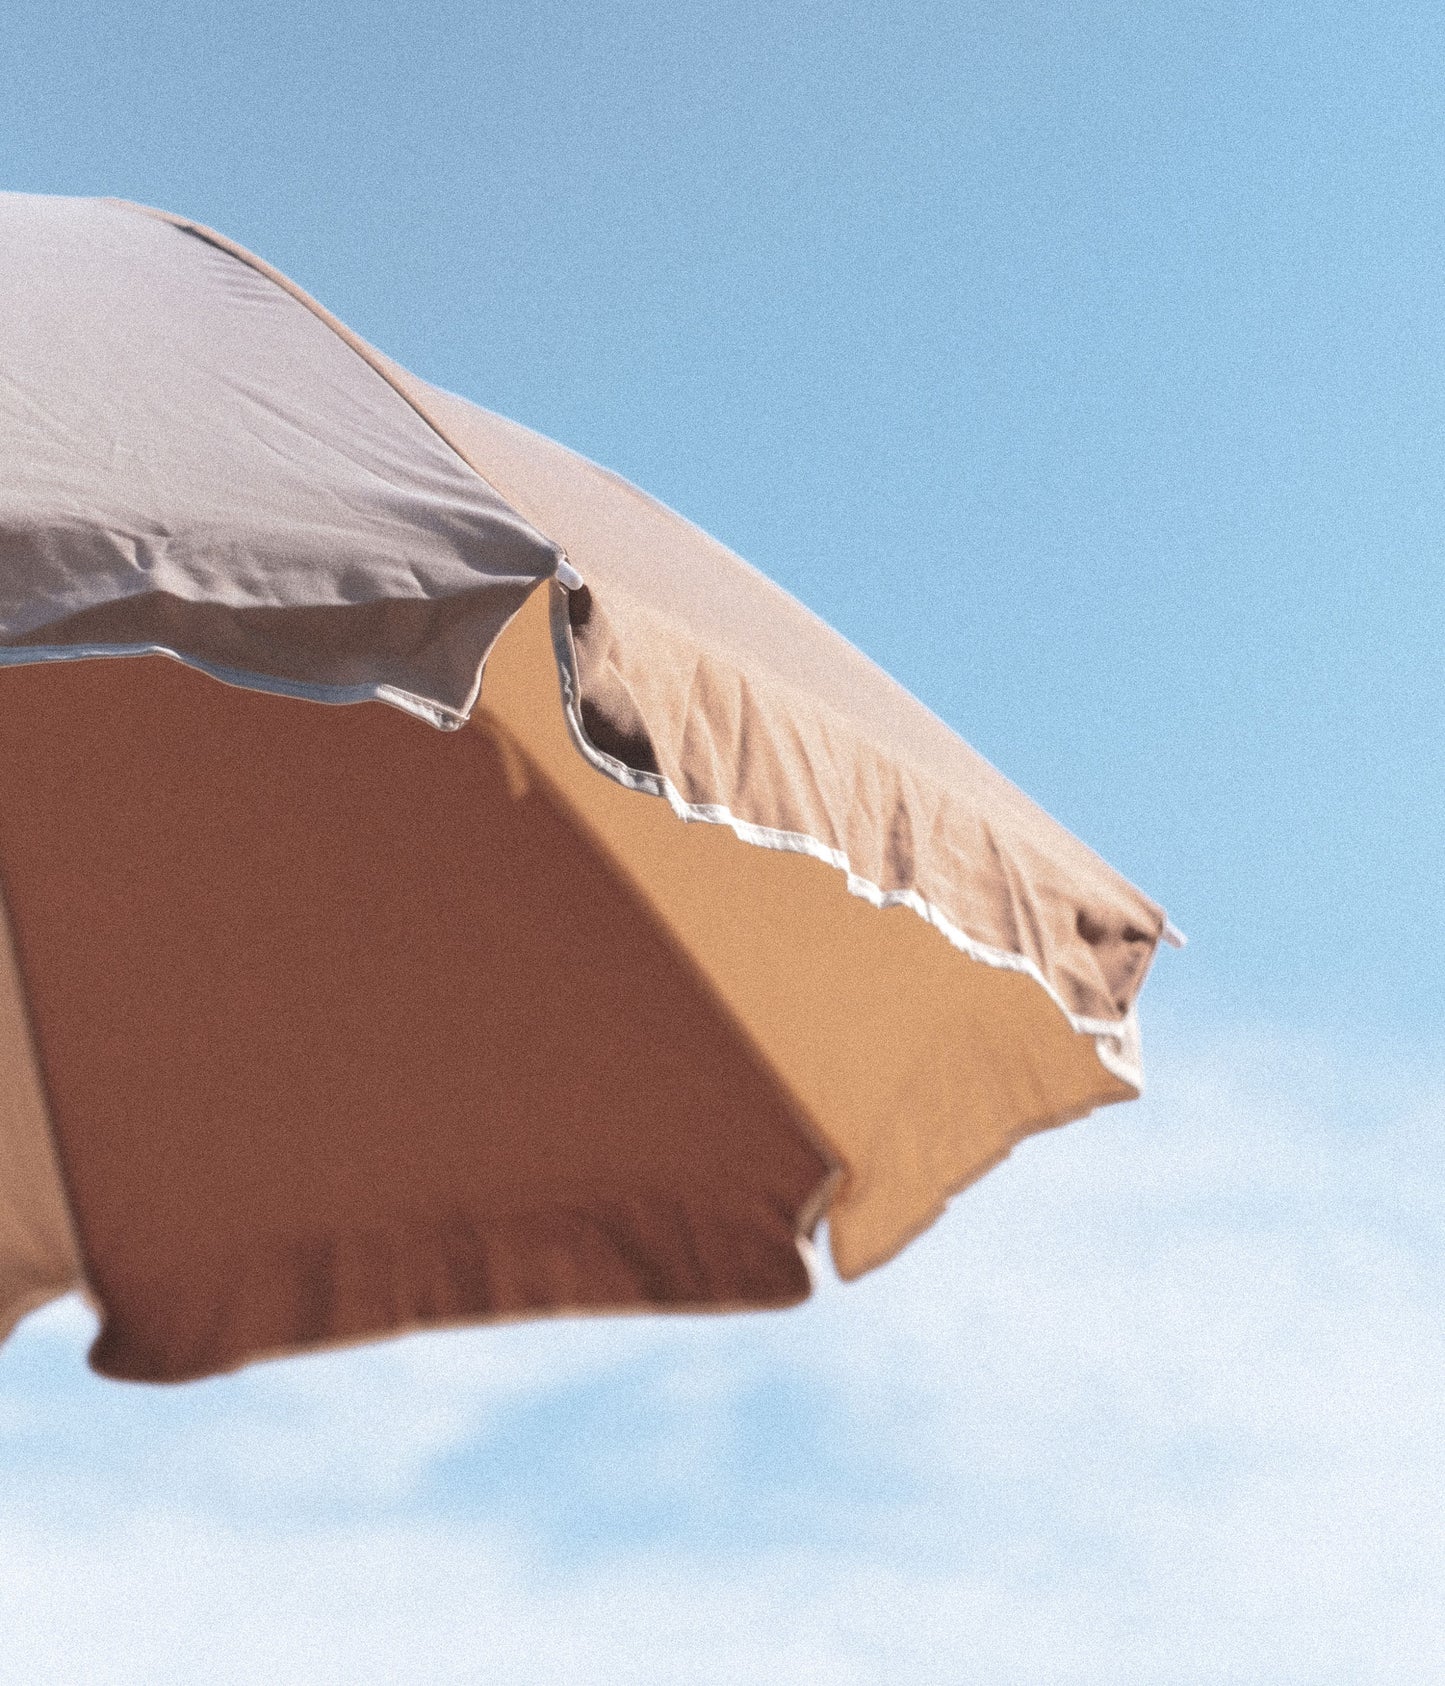 Husk Splice Travel Umbrella